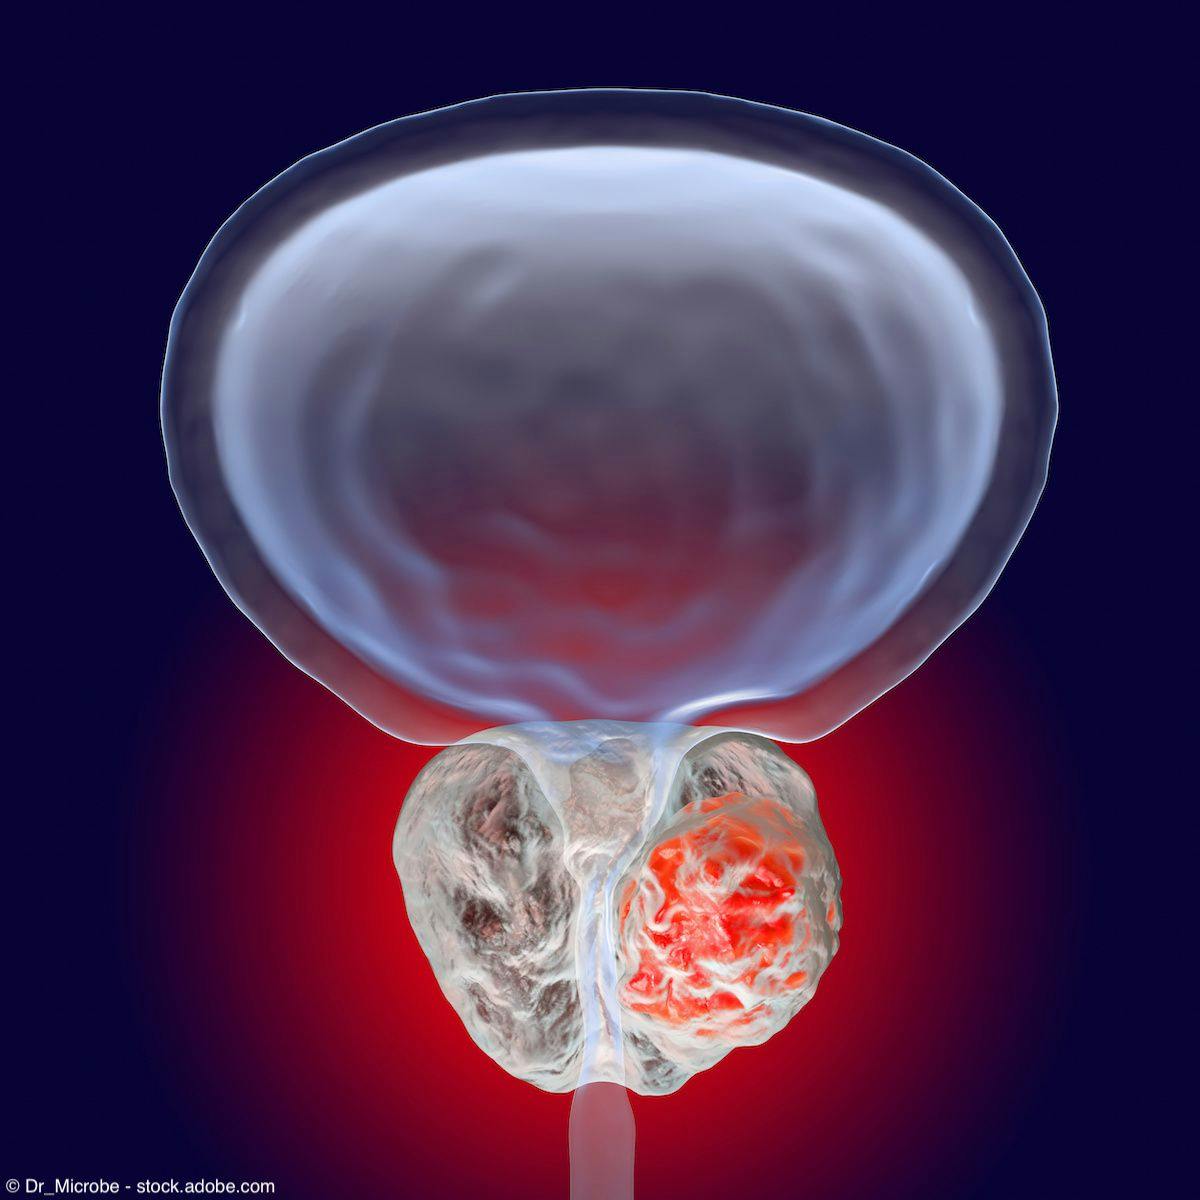 Prostate cancer, 3D illustration showing presence of tumor inside prostate gland which compresses urethra | Image Credit: @ Dr_Microbe - stock.adobe.com